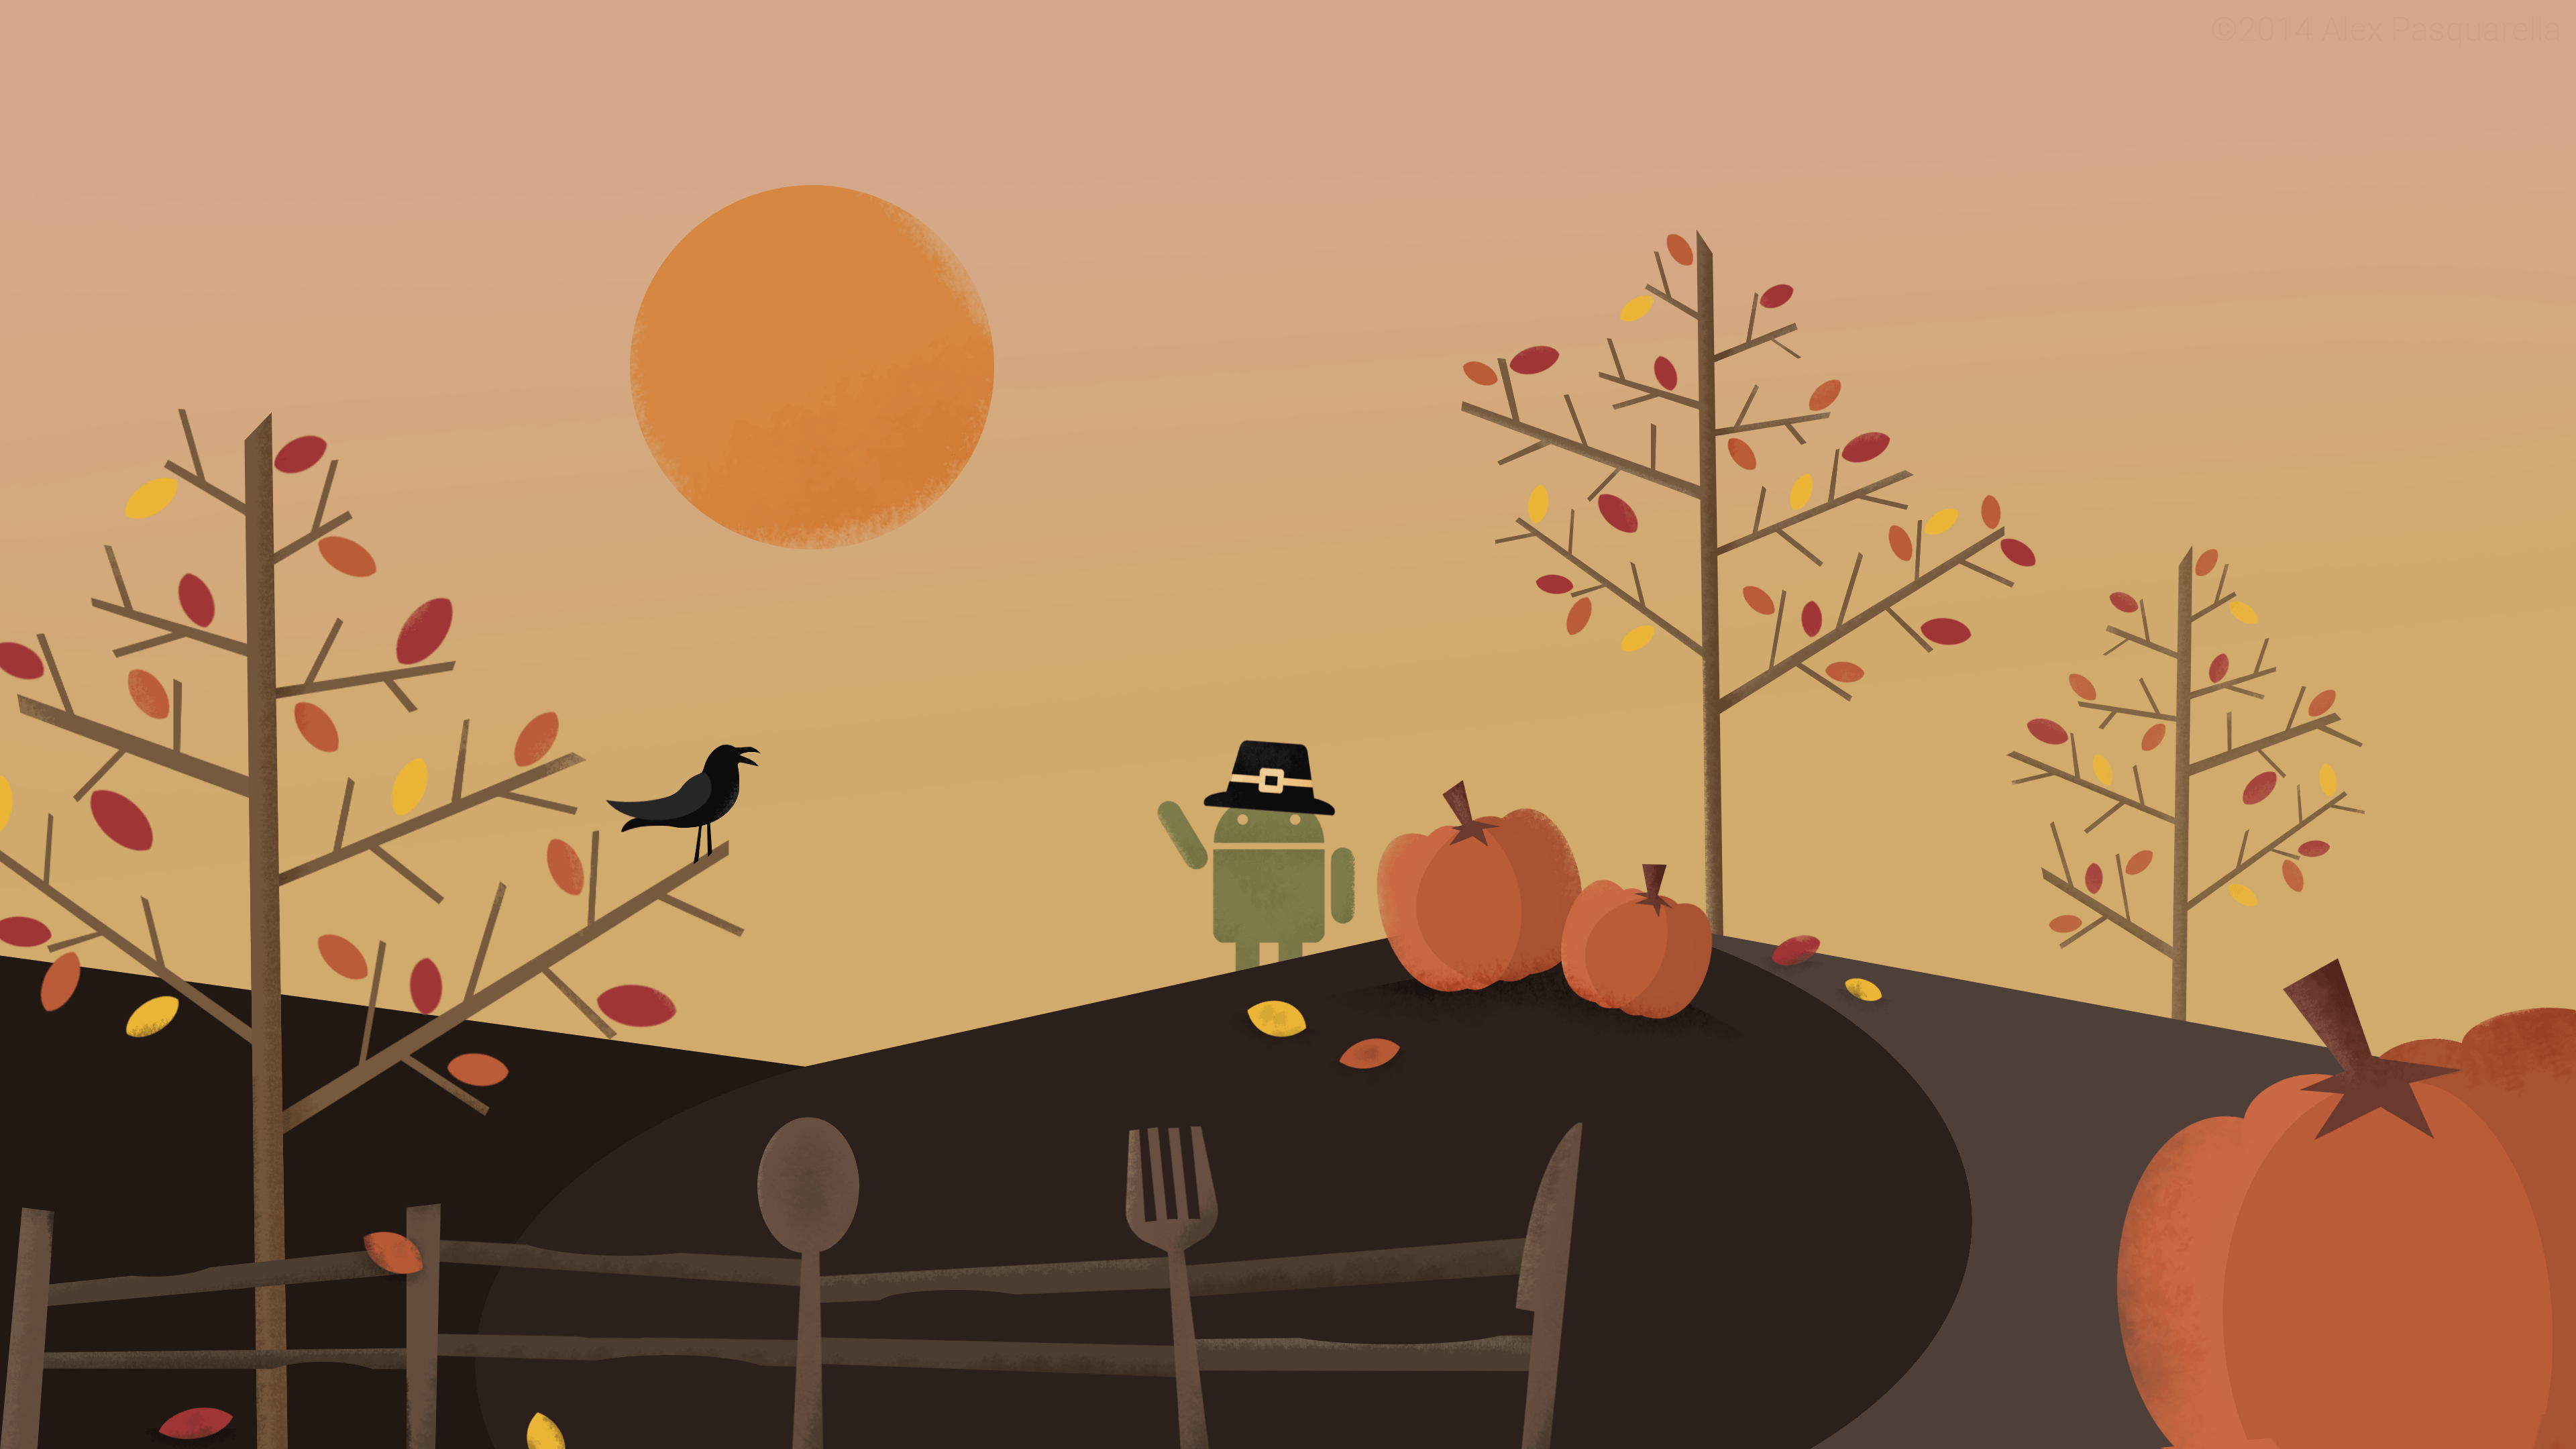 Thanksgiving HD Background. Wallpaper, Background, Image, Art